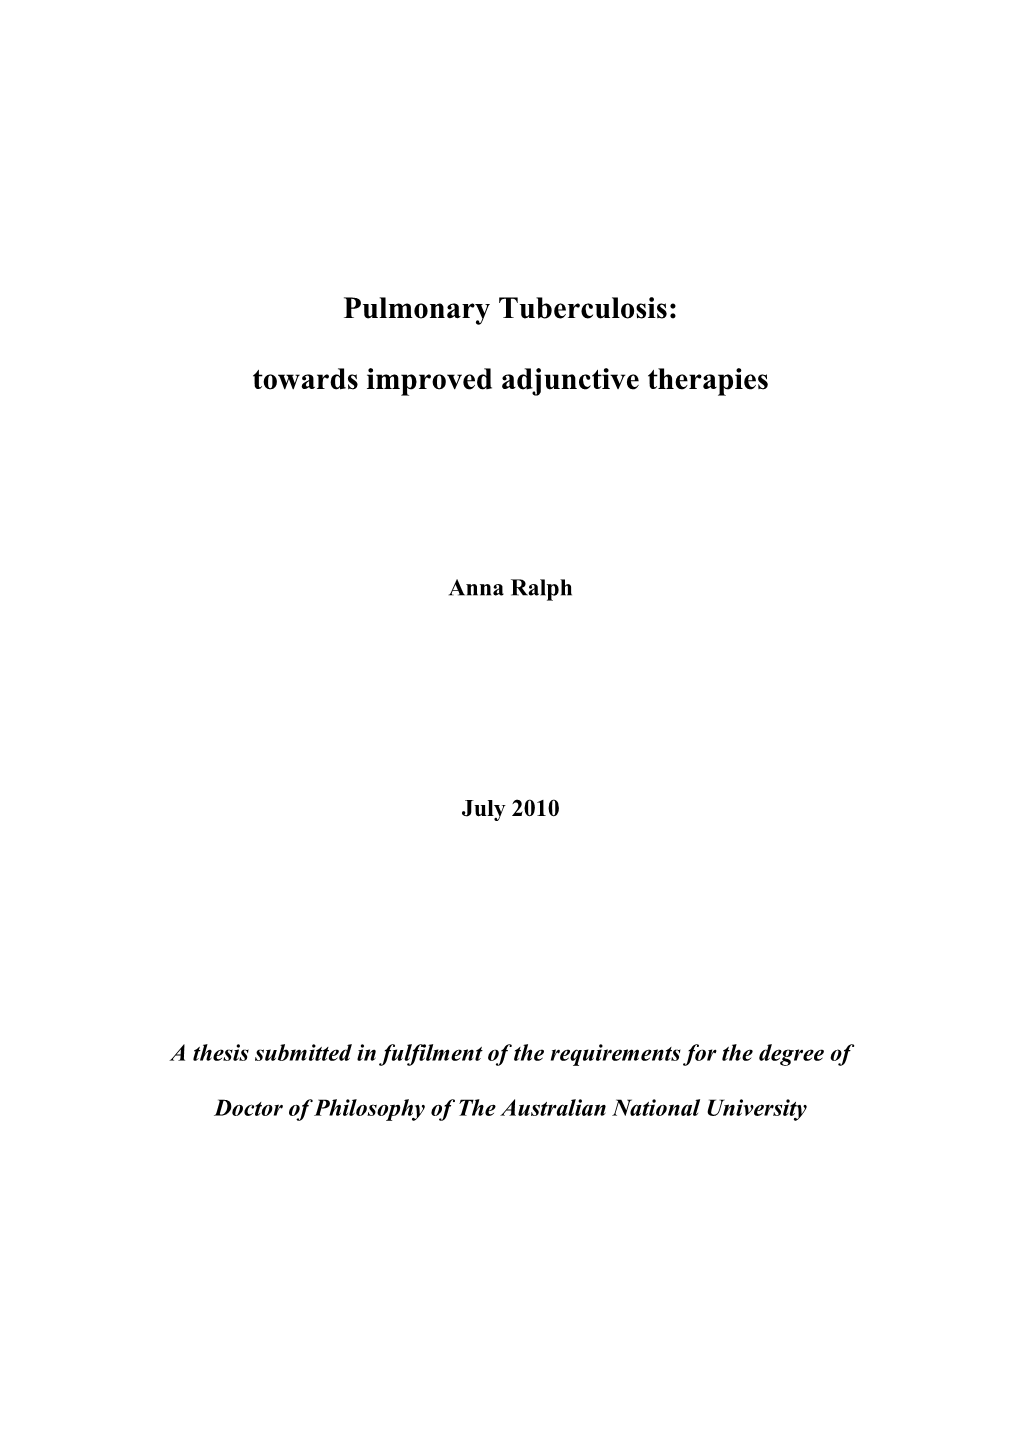 Pulmonary Tuberculosis: Towards Improved Adjunctive Therapies